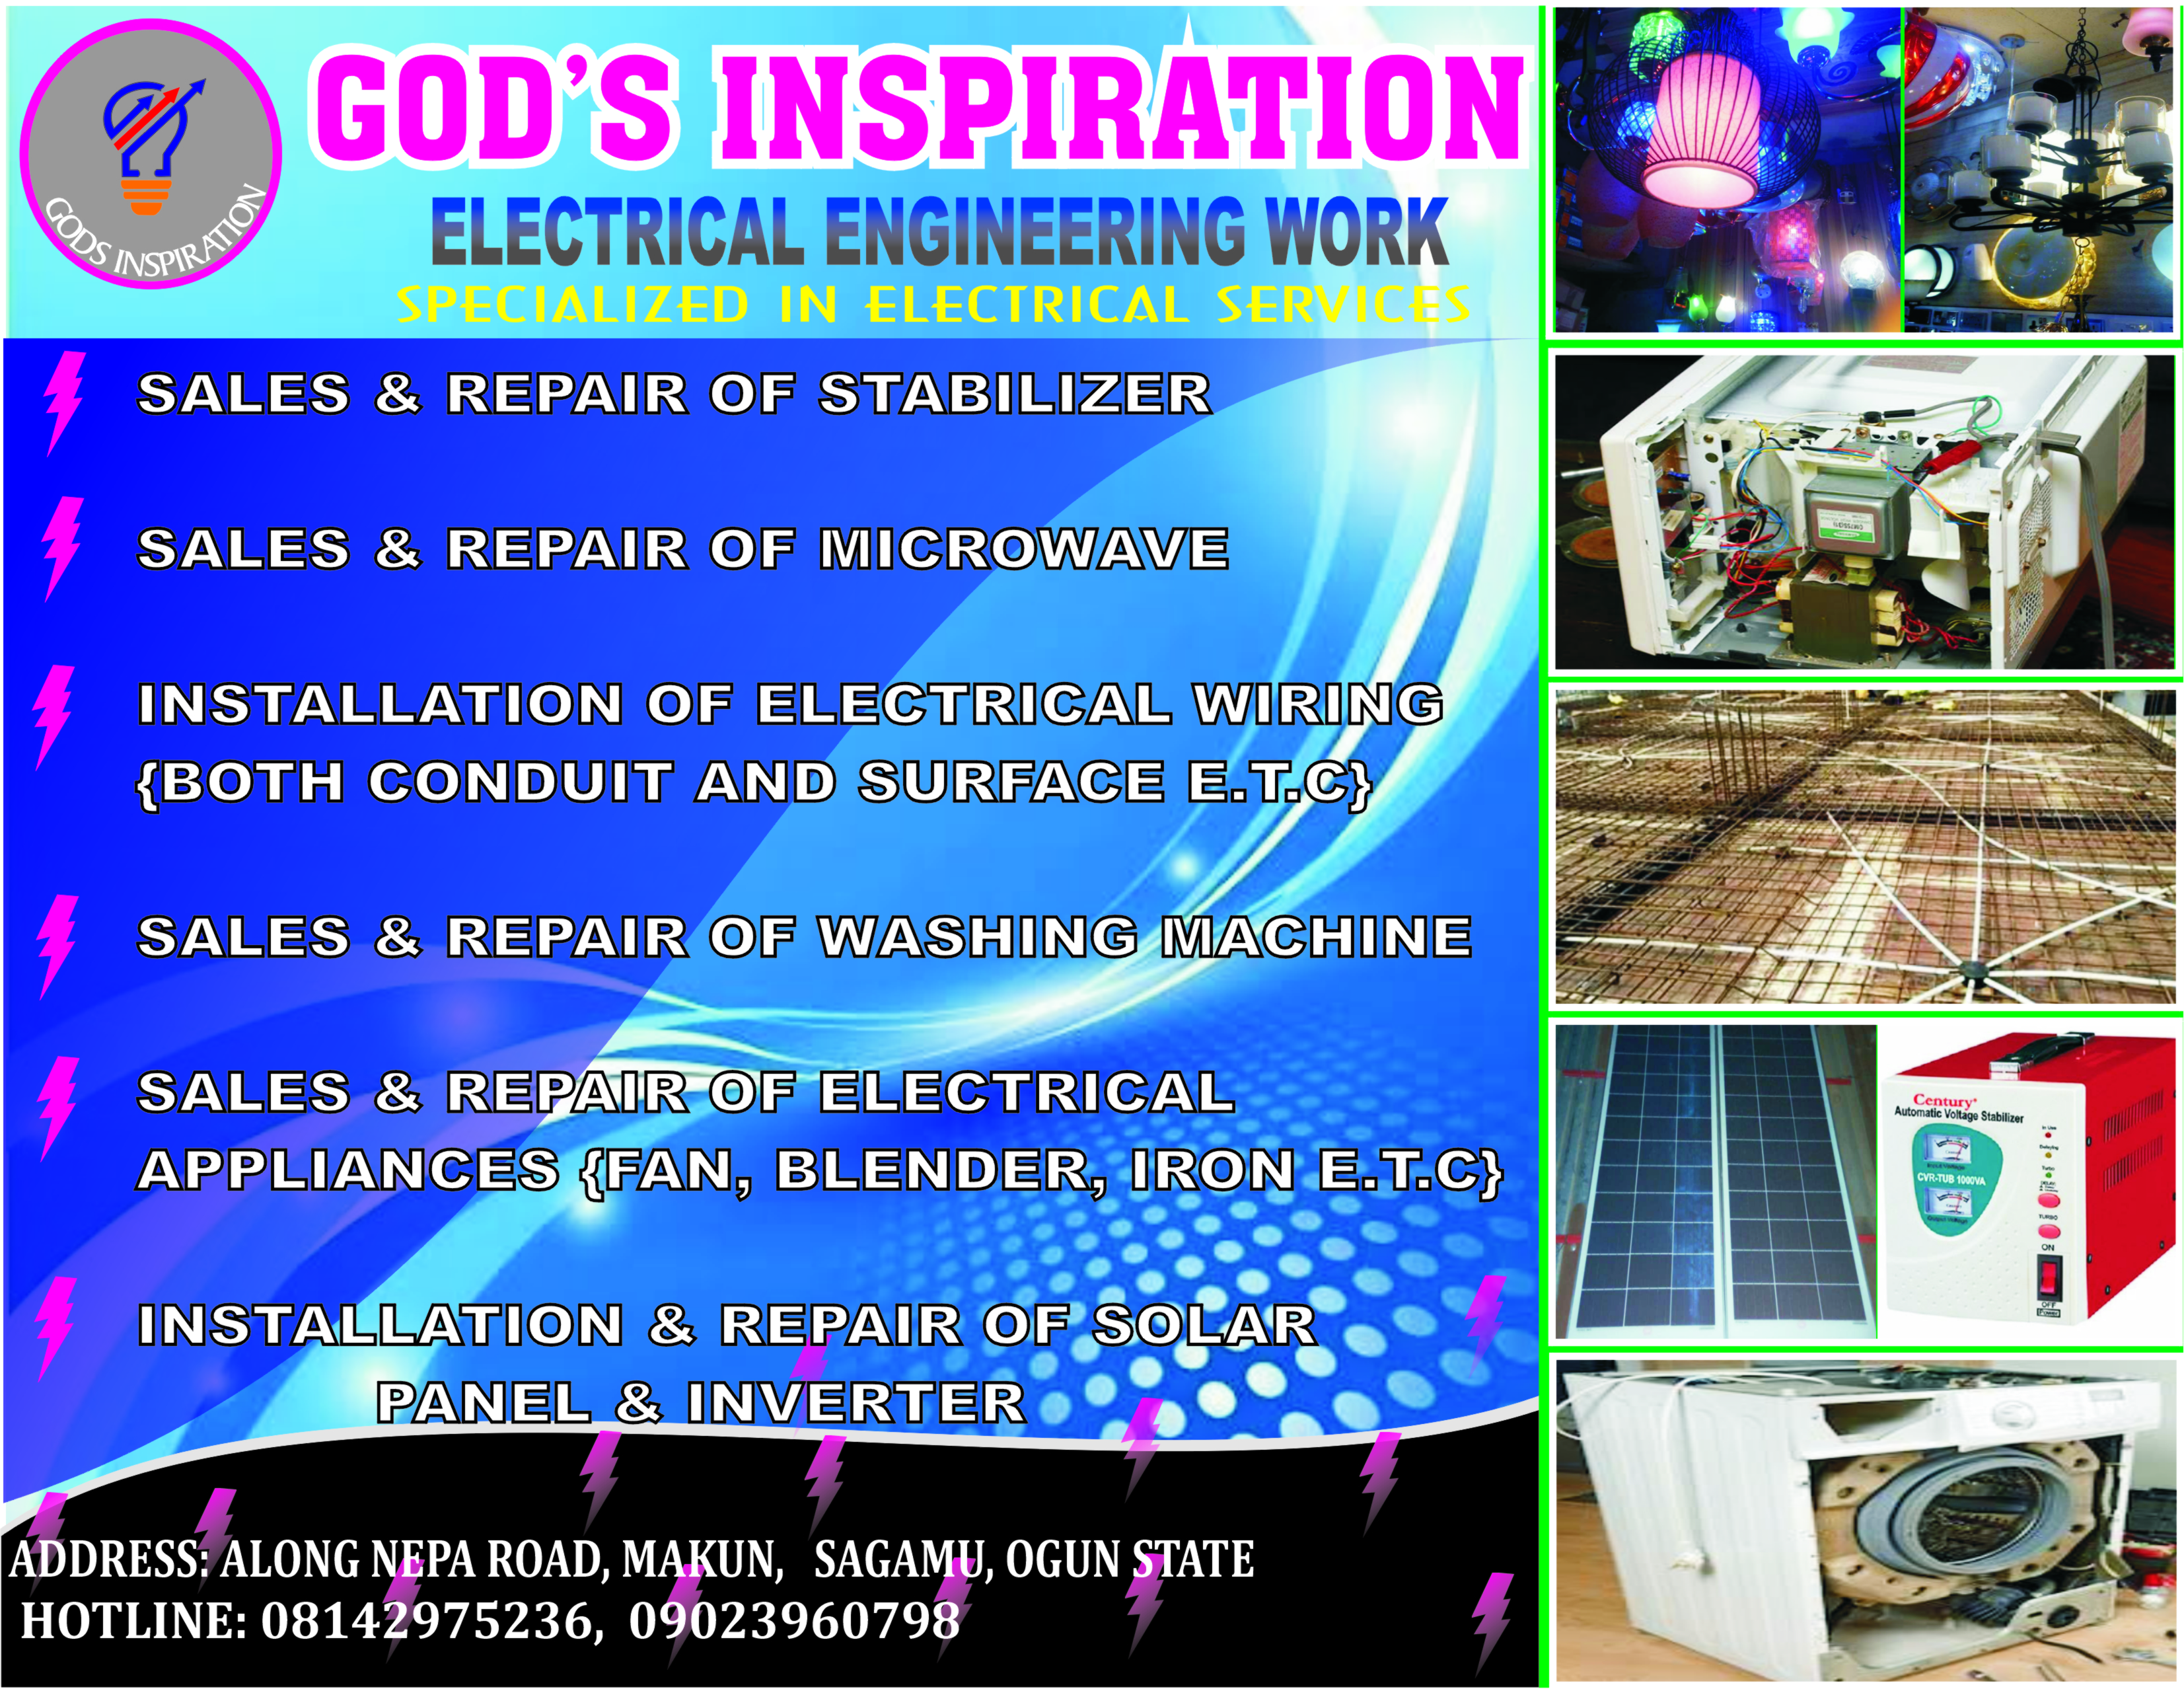 God's inspiration electrical installation provider